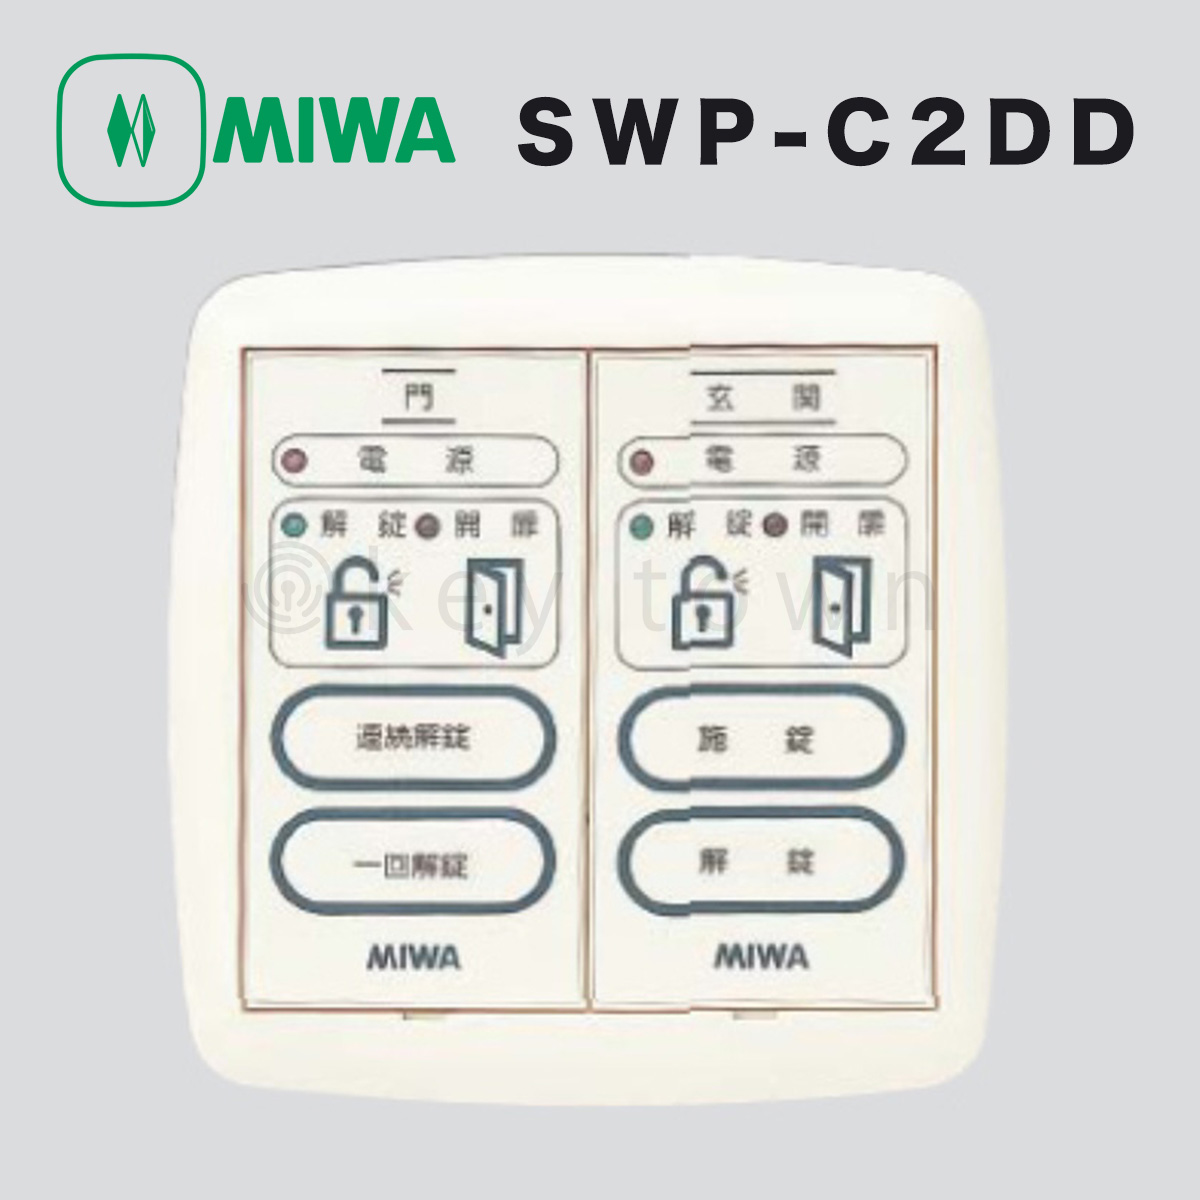 MIWA【美和ロック】 SWP-C2DD 操作表示器 遠隔操作[MIWA SWD-C2DD]｜鍵・シリンダーの格安ネット通販【鍵TOWN】